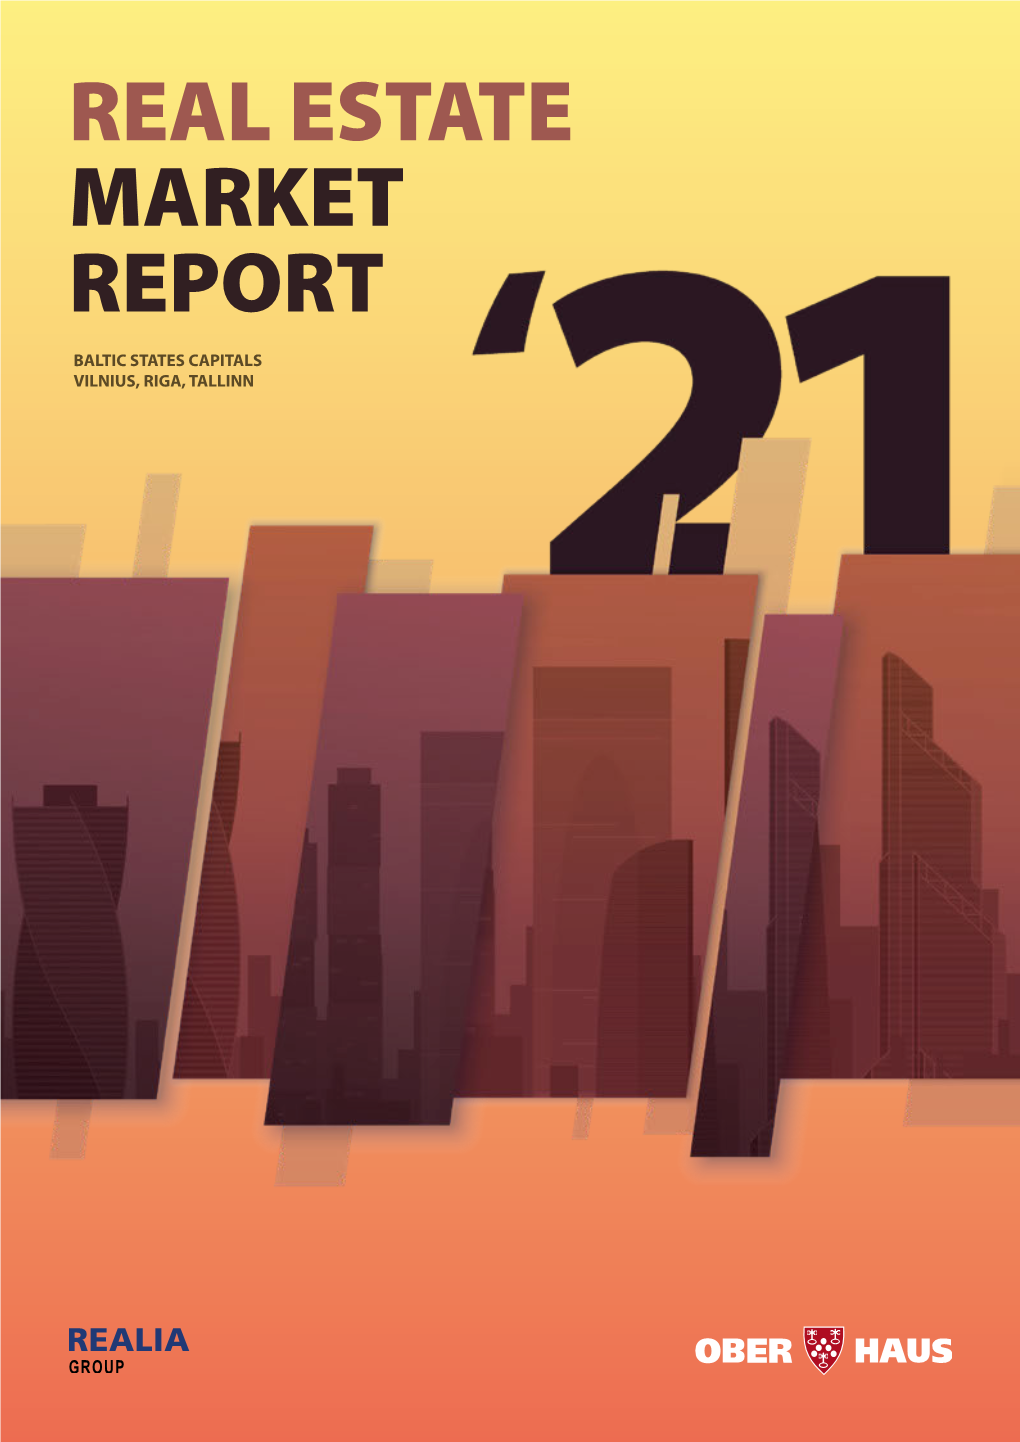 6 MB Ober-Haus Real Estate Market Report 2021